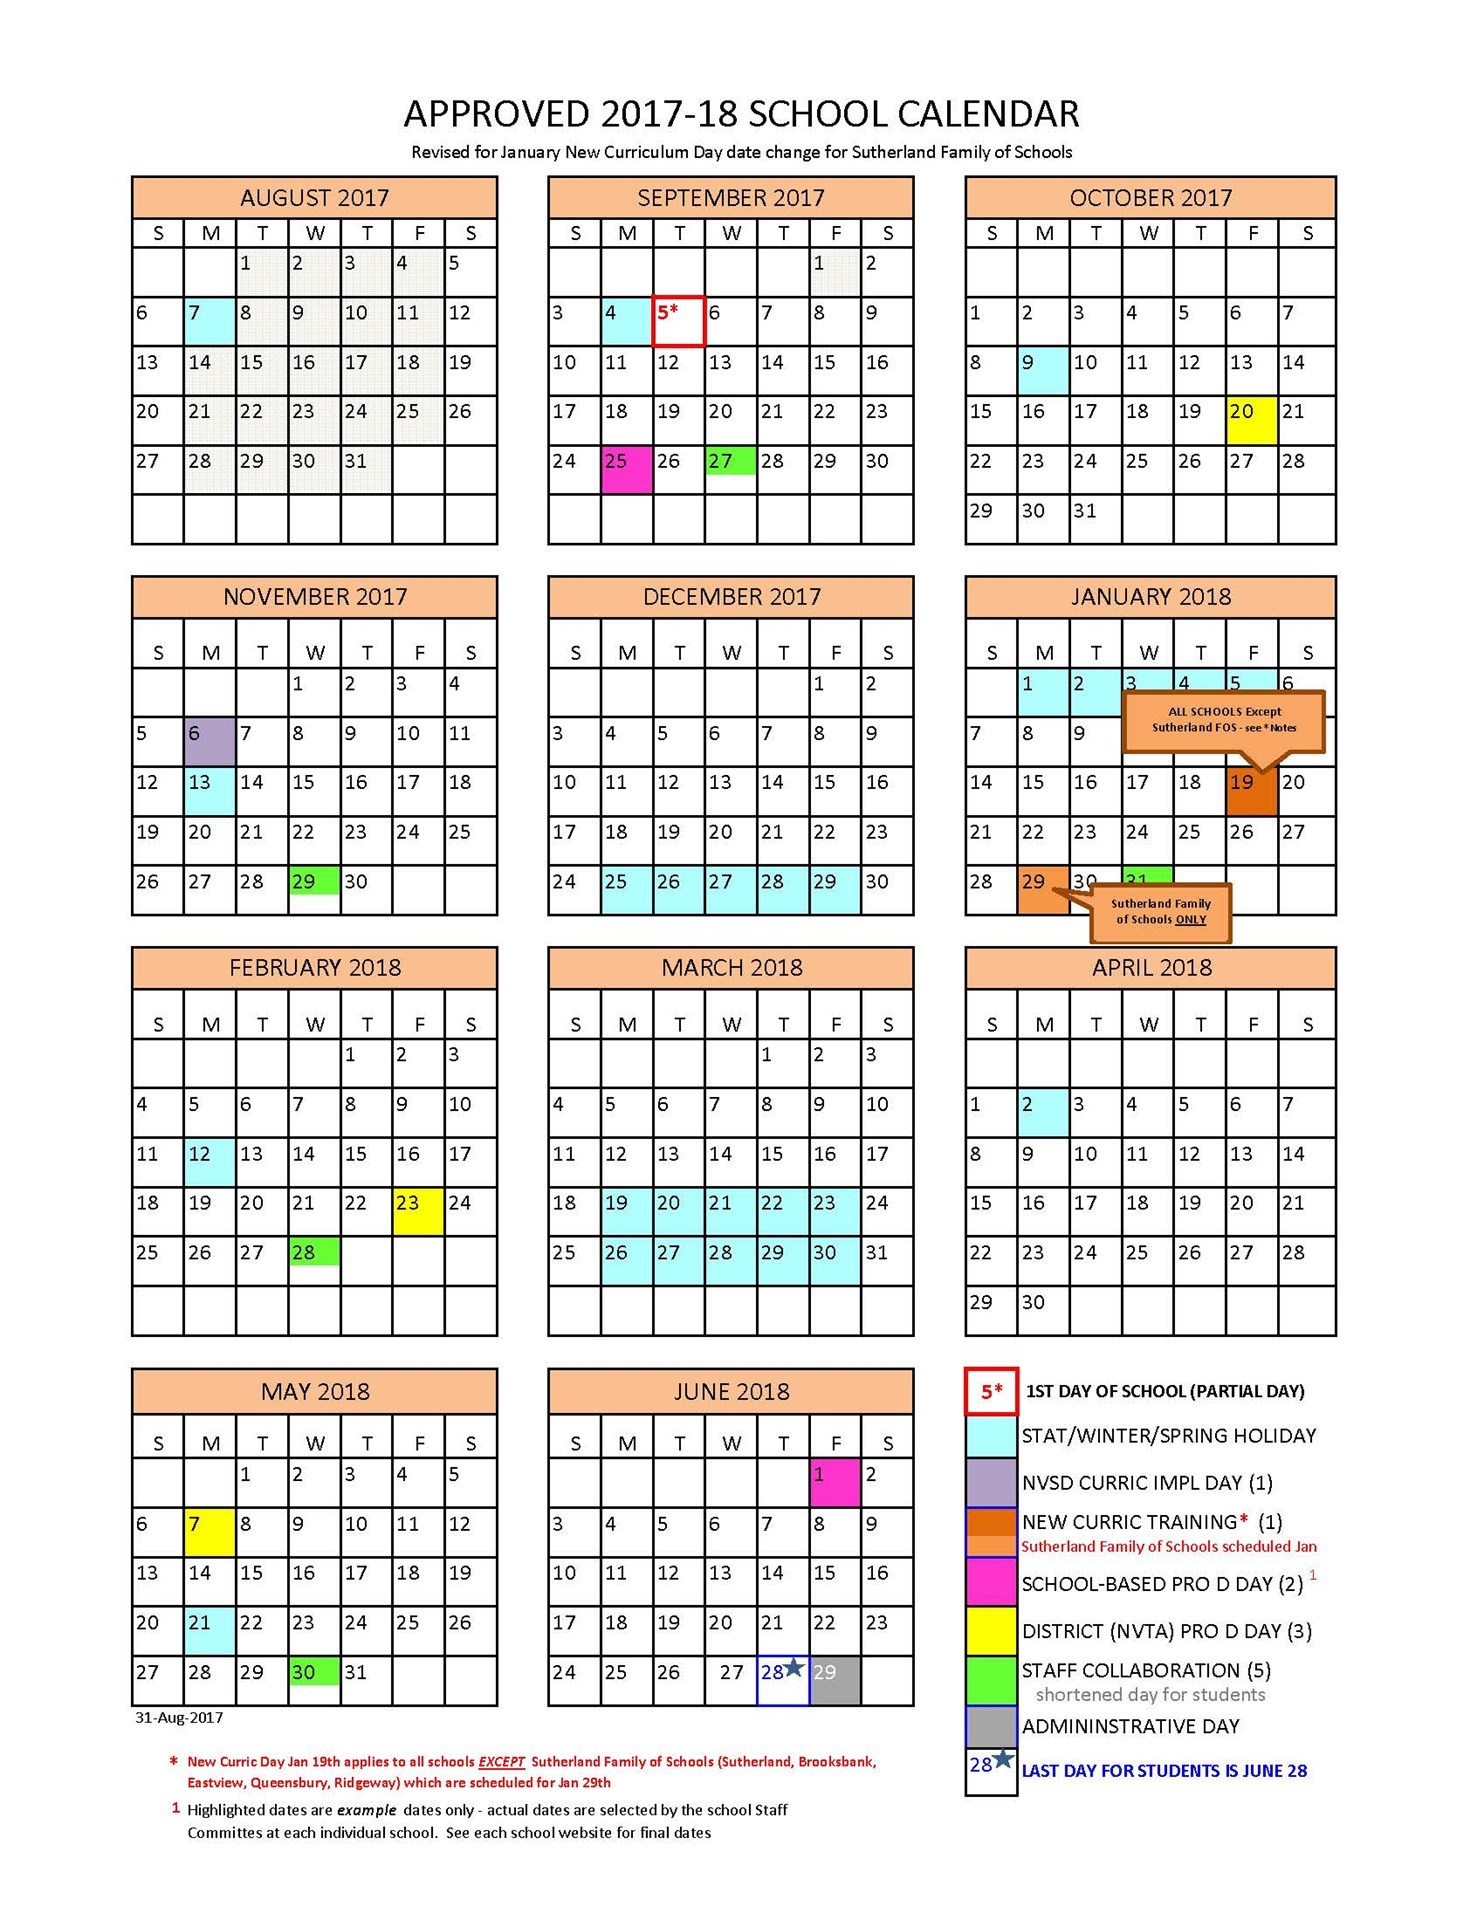 northshore-school-district-calendar-qualads